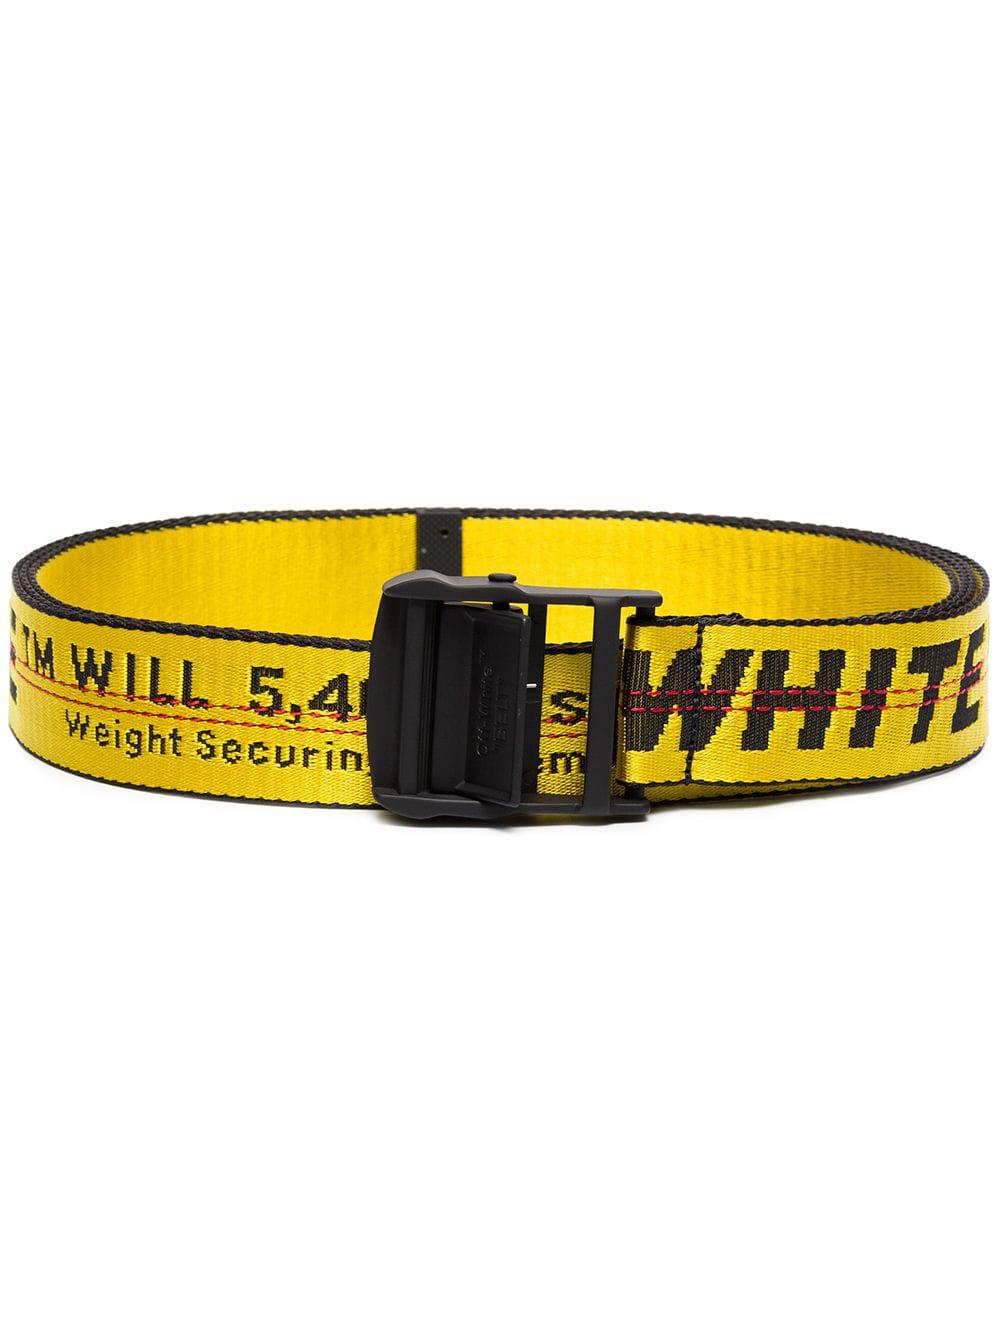 Off-White c/o Virgil Abloh "industrial" Belt in Yellow for Men | Lyst